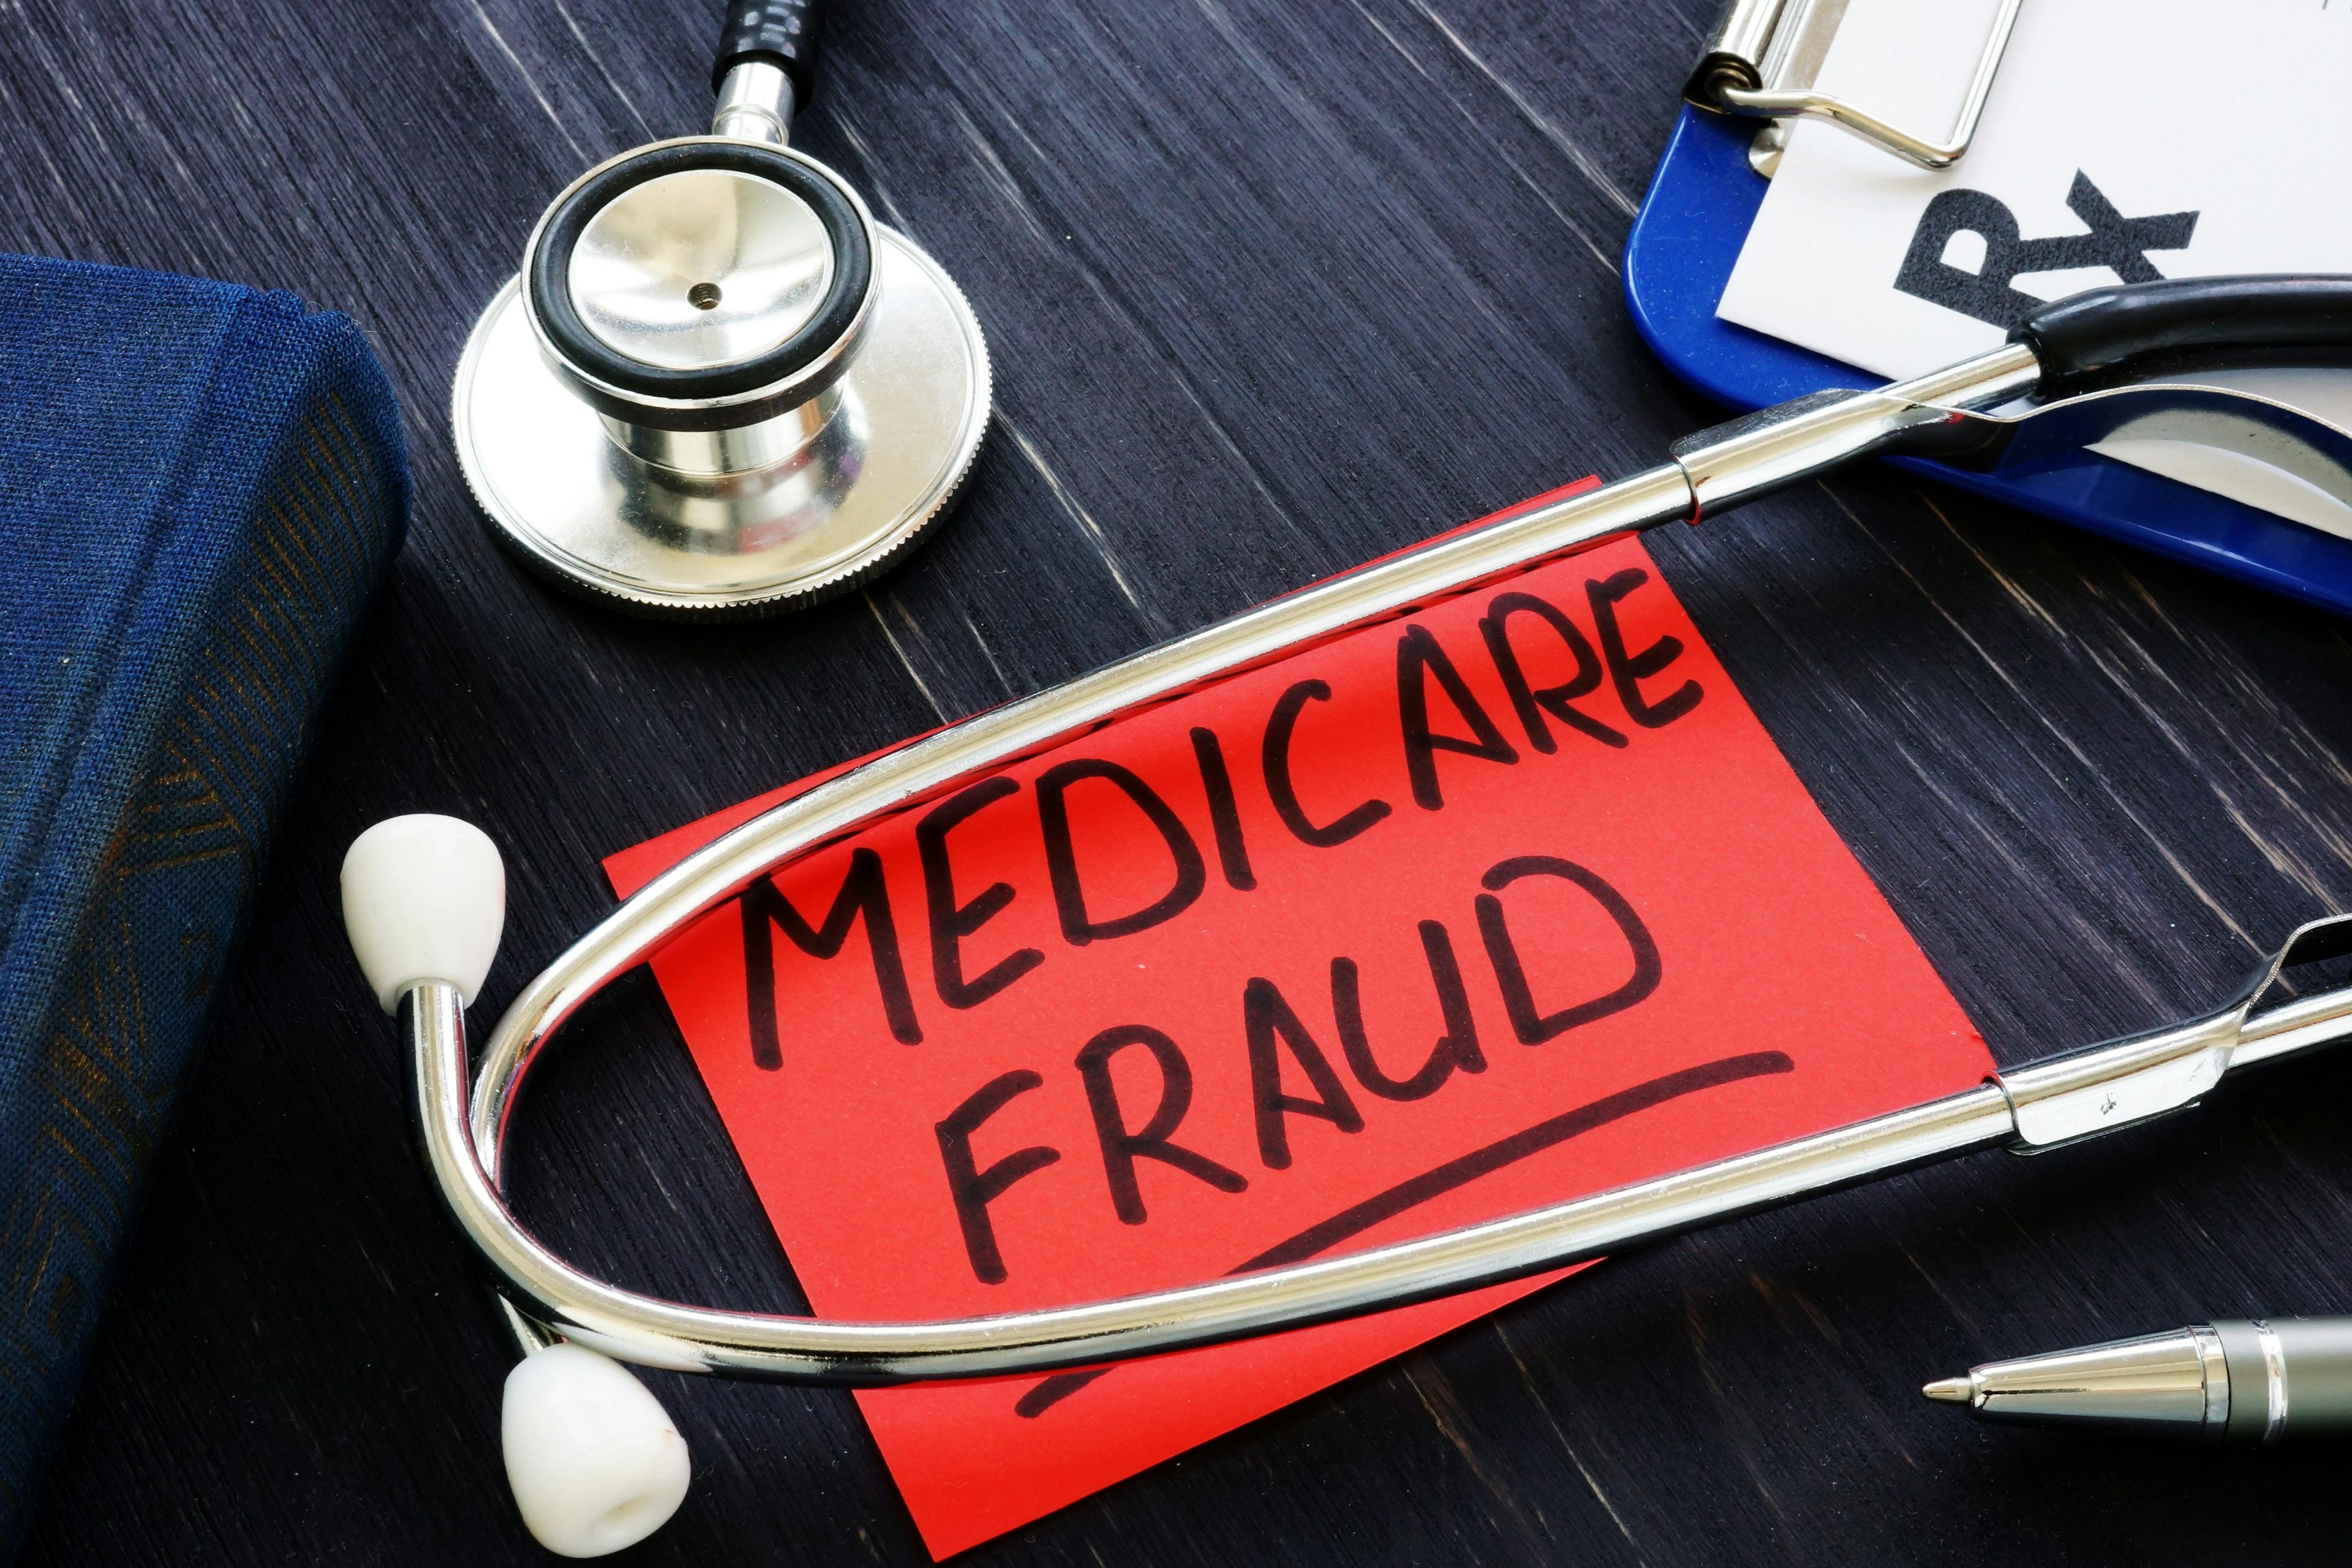 Medicare fraud: Feds indict 35 in alleged $2.1 billion fraud scheme involving telemedicine